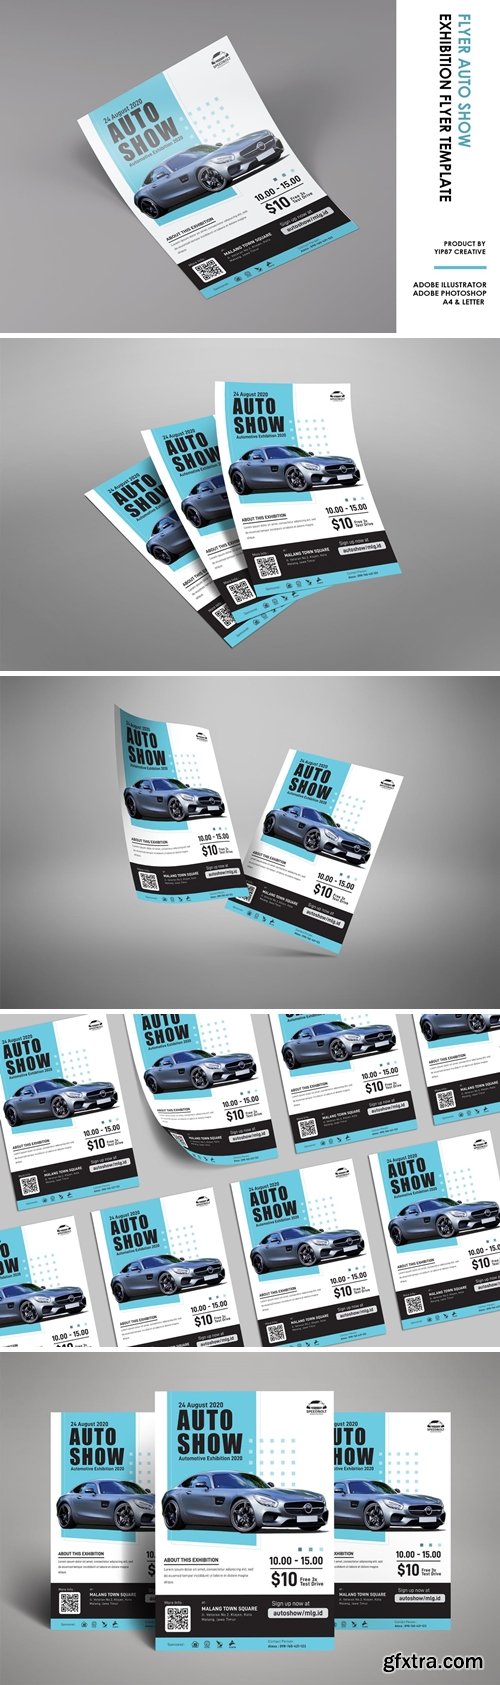 Auto Show - Car Exhibition Poster Flyer